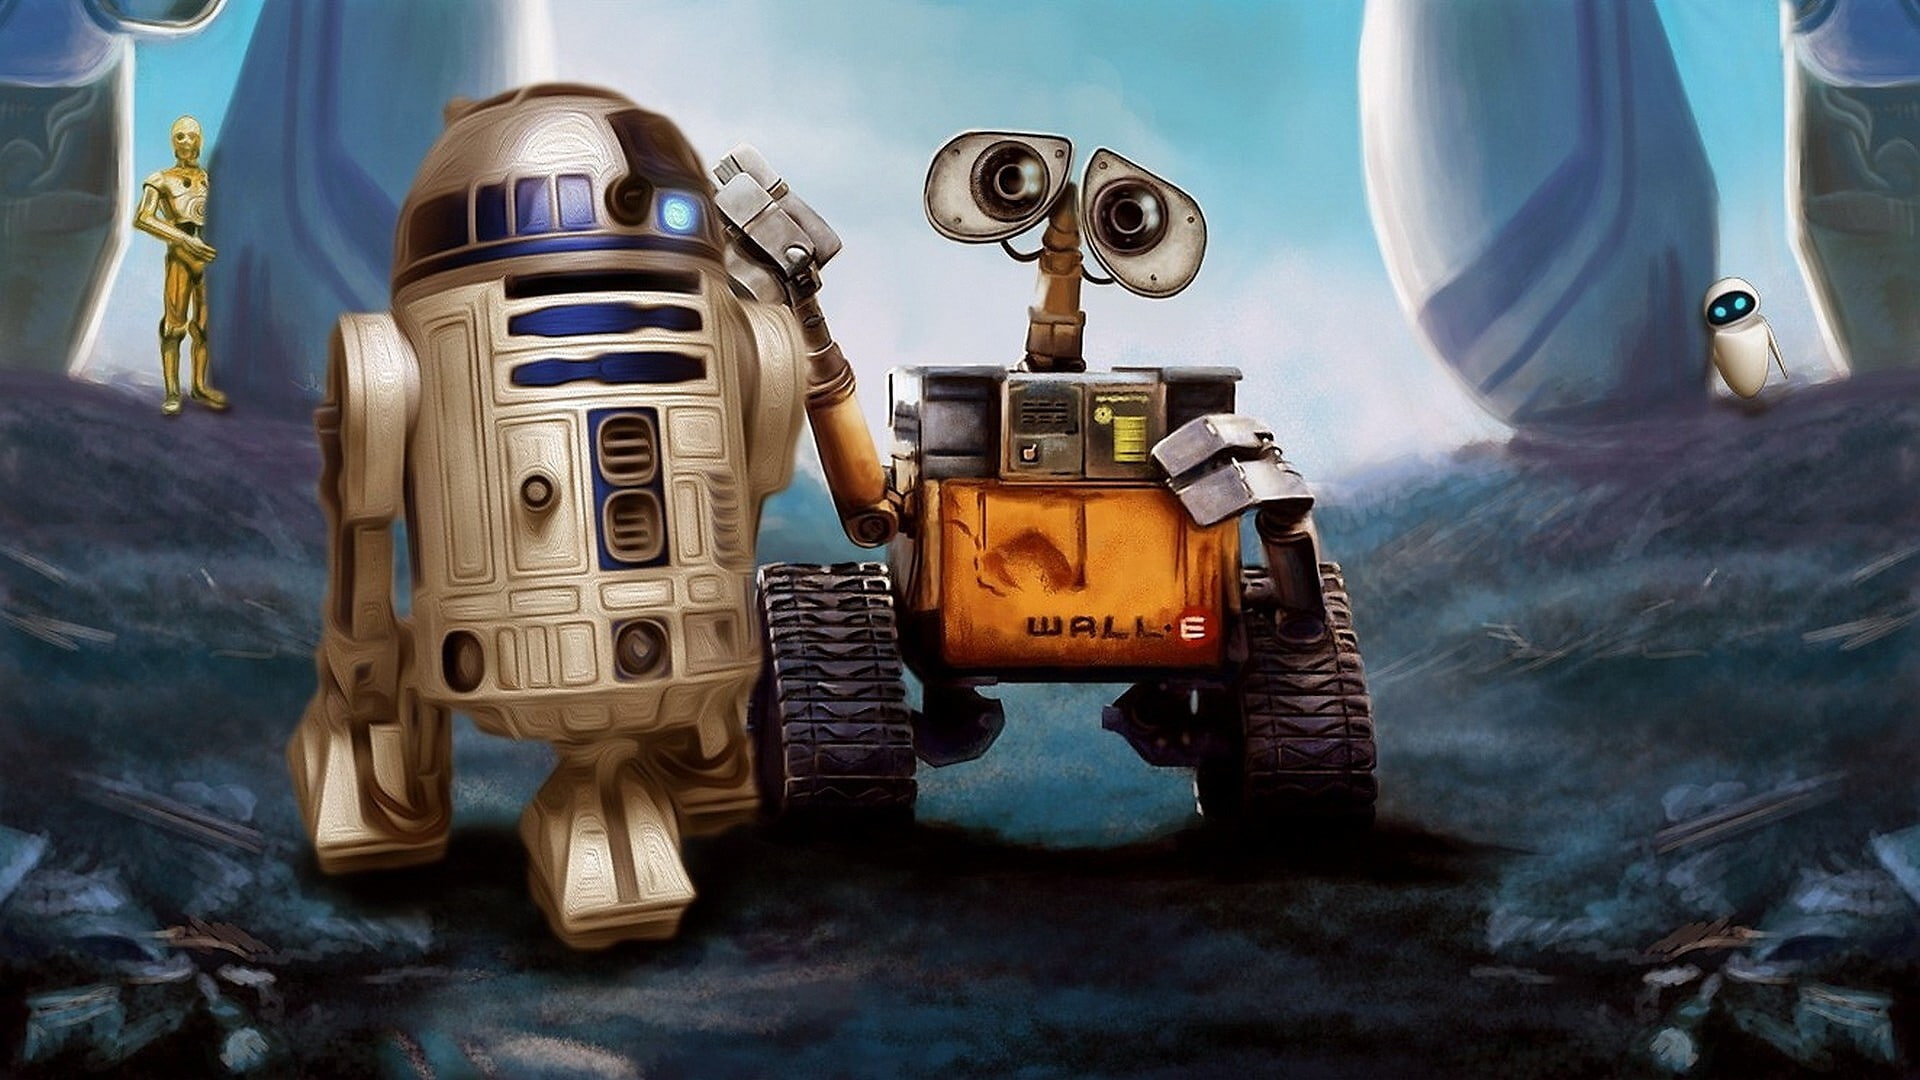 Crossover, movies, Pixar Animation Studios, r2 d2, robot, Star Wars